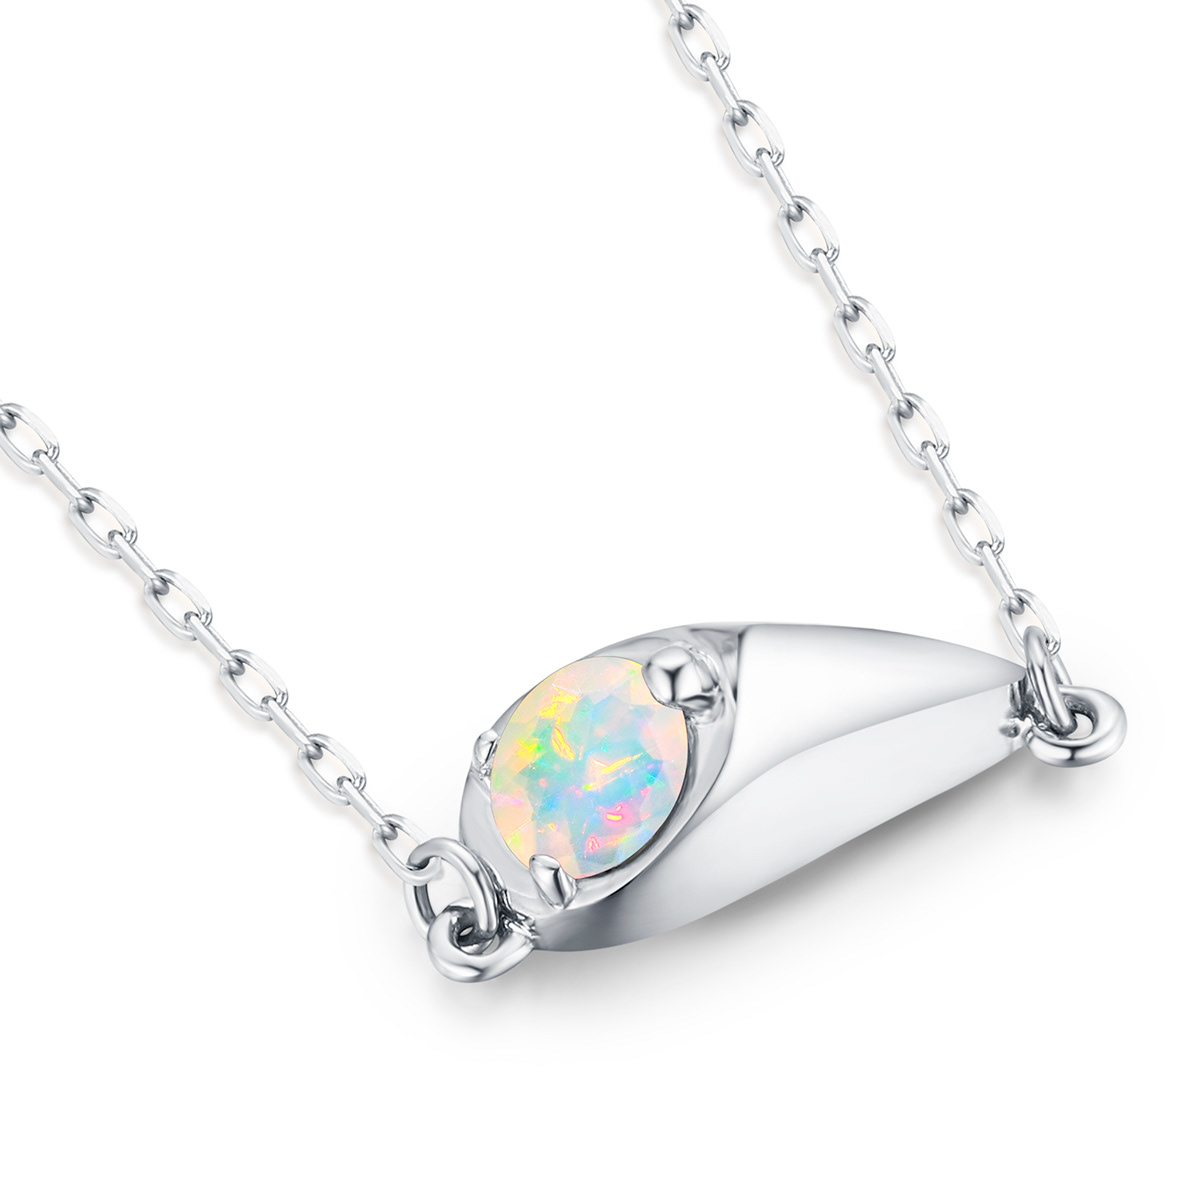 Opal Jewelry rose quartz majade majade jewelry majade jewelry design alternative birthstone october birthstone opal pink tourmaline